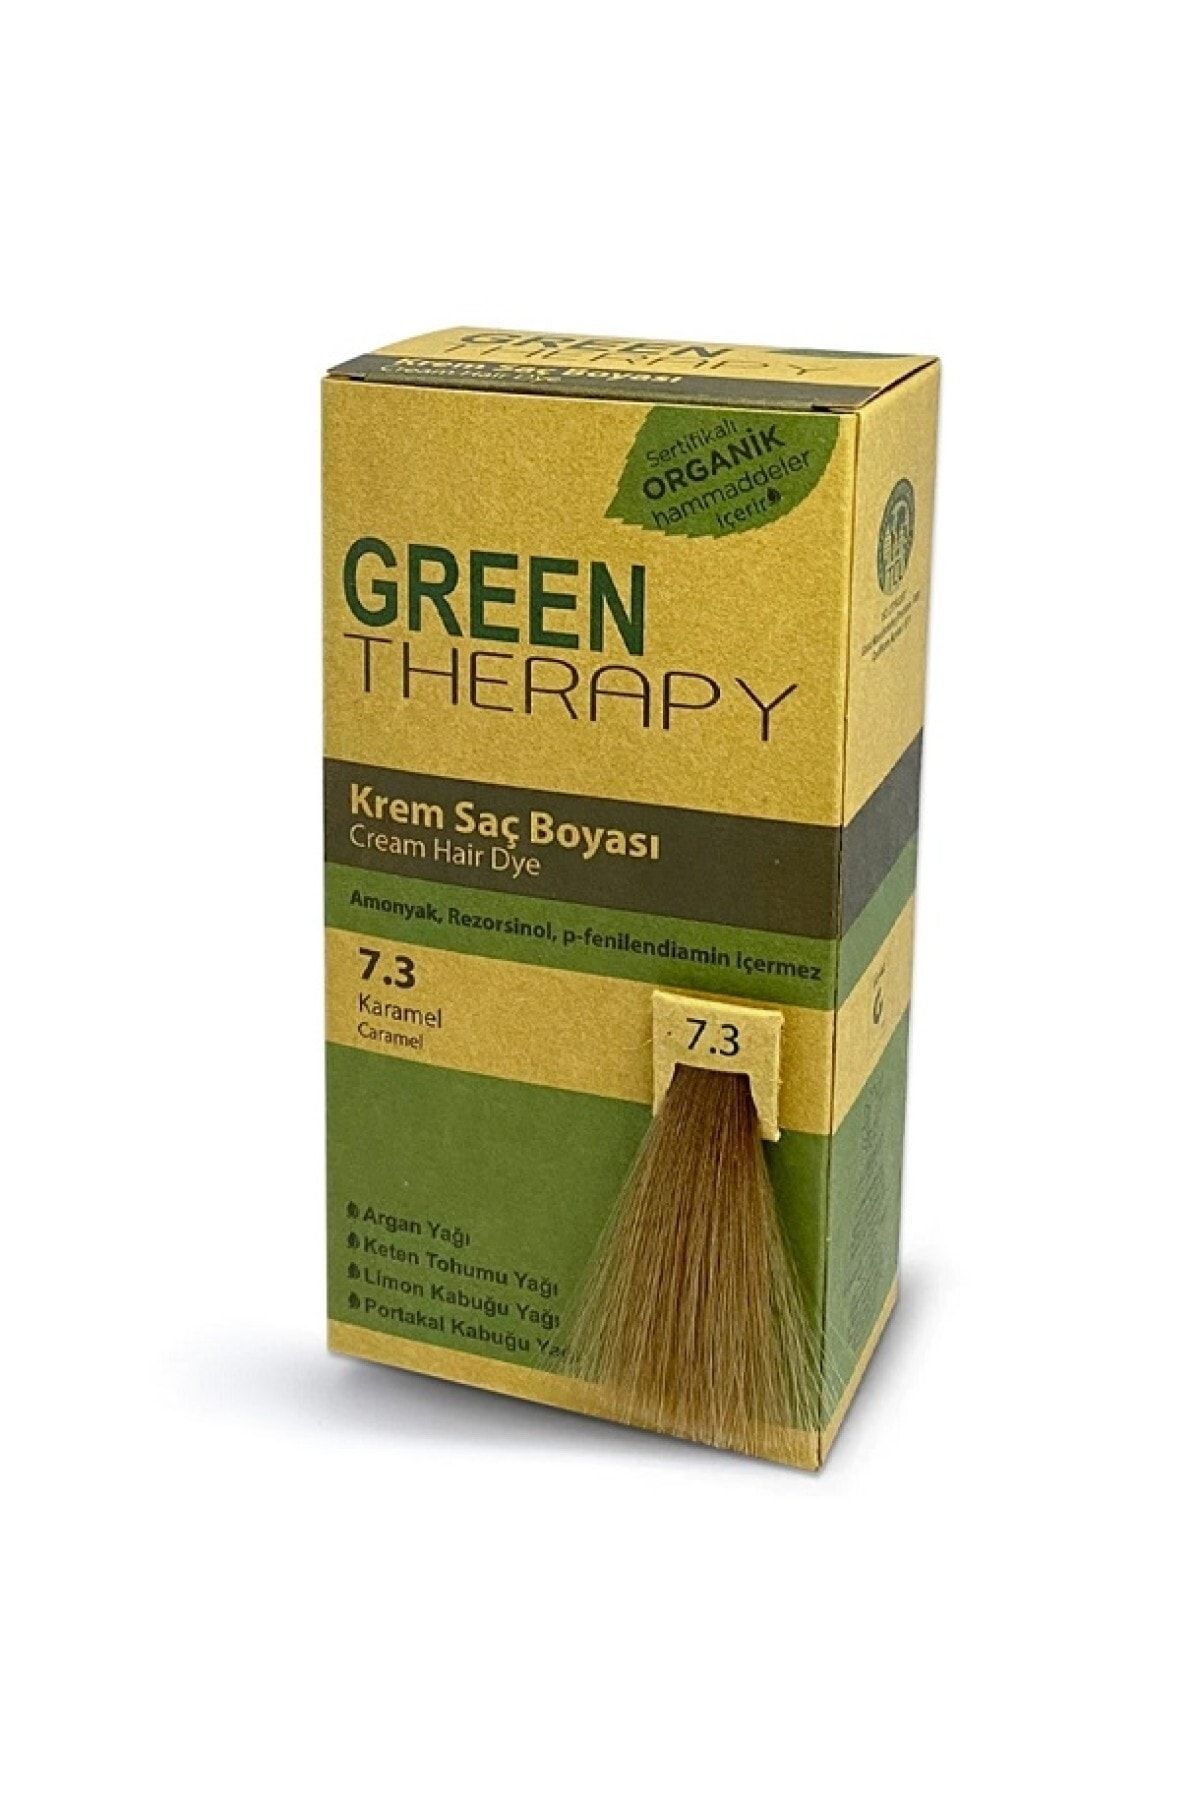 Green Therapy Krem Saç Boyası 7.3 Karamel